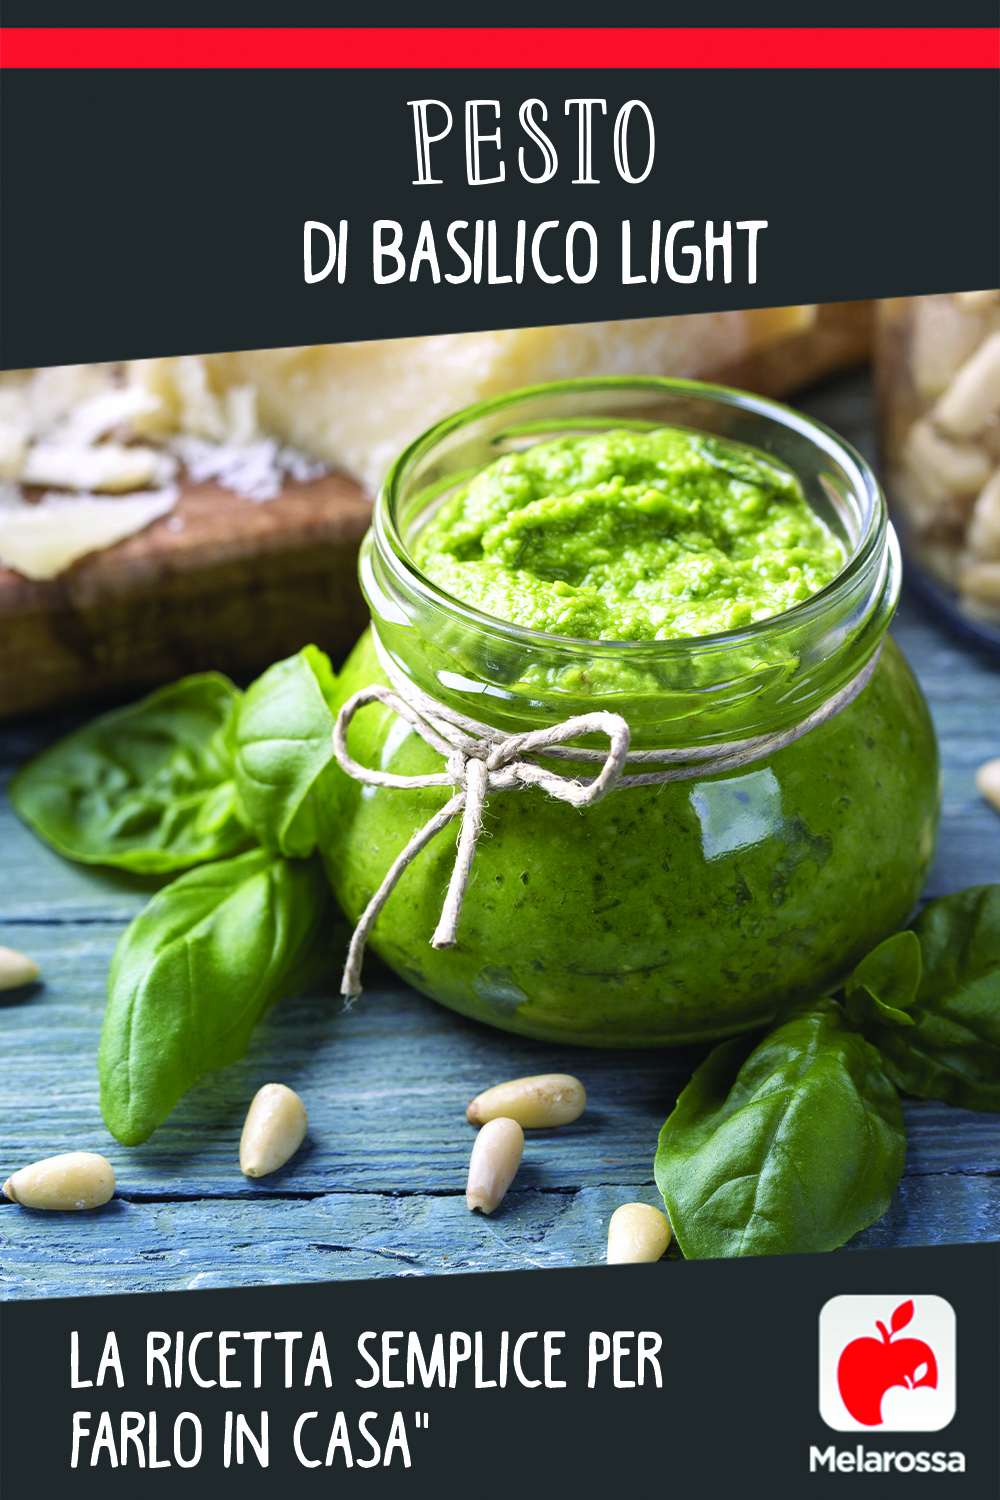 Pesto di basilico light: Pinterest